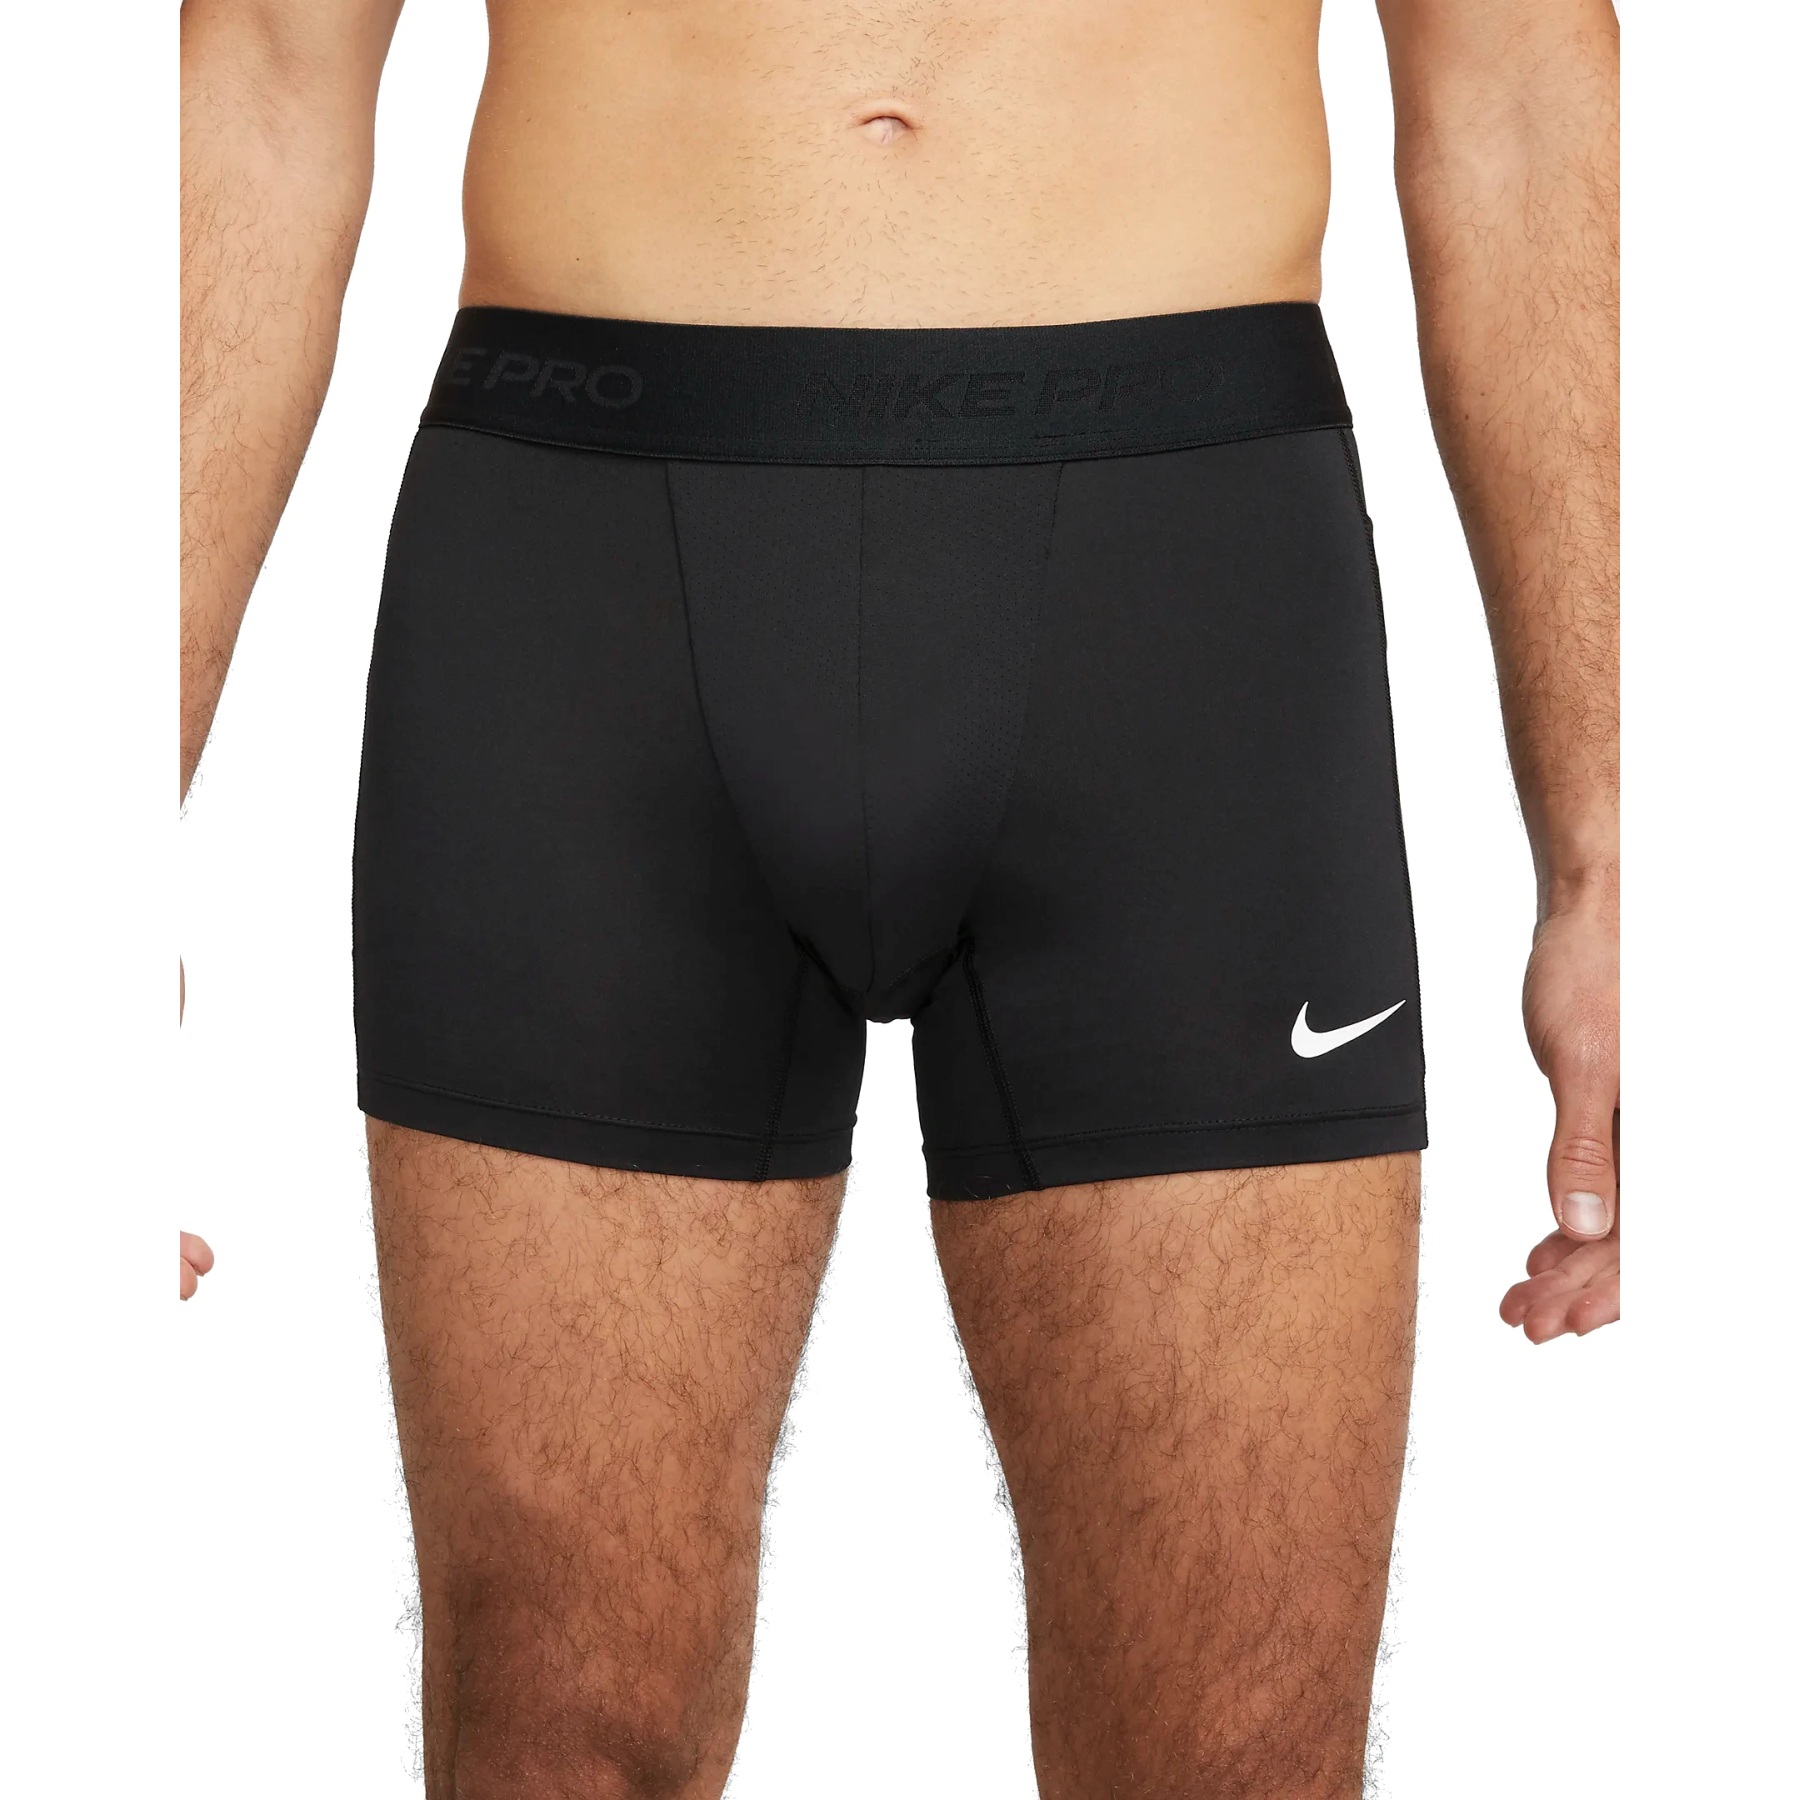 Productfoto van Nike Pro Dri-FIT Shorts Heren - zwart/wit FD0685-010